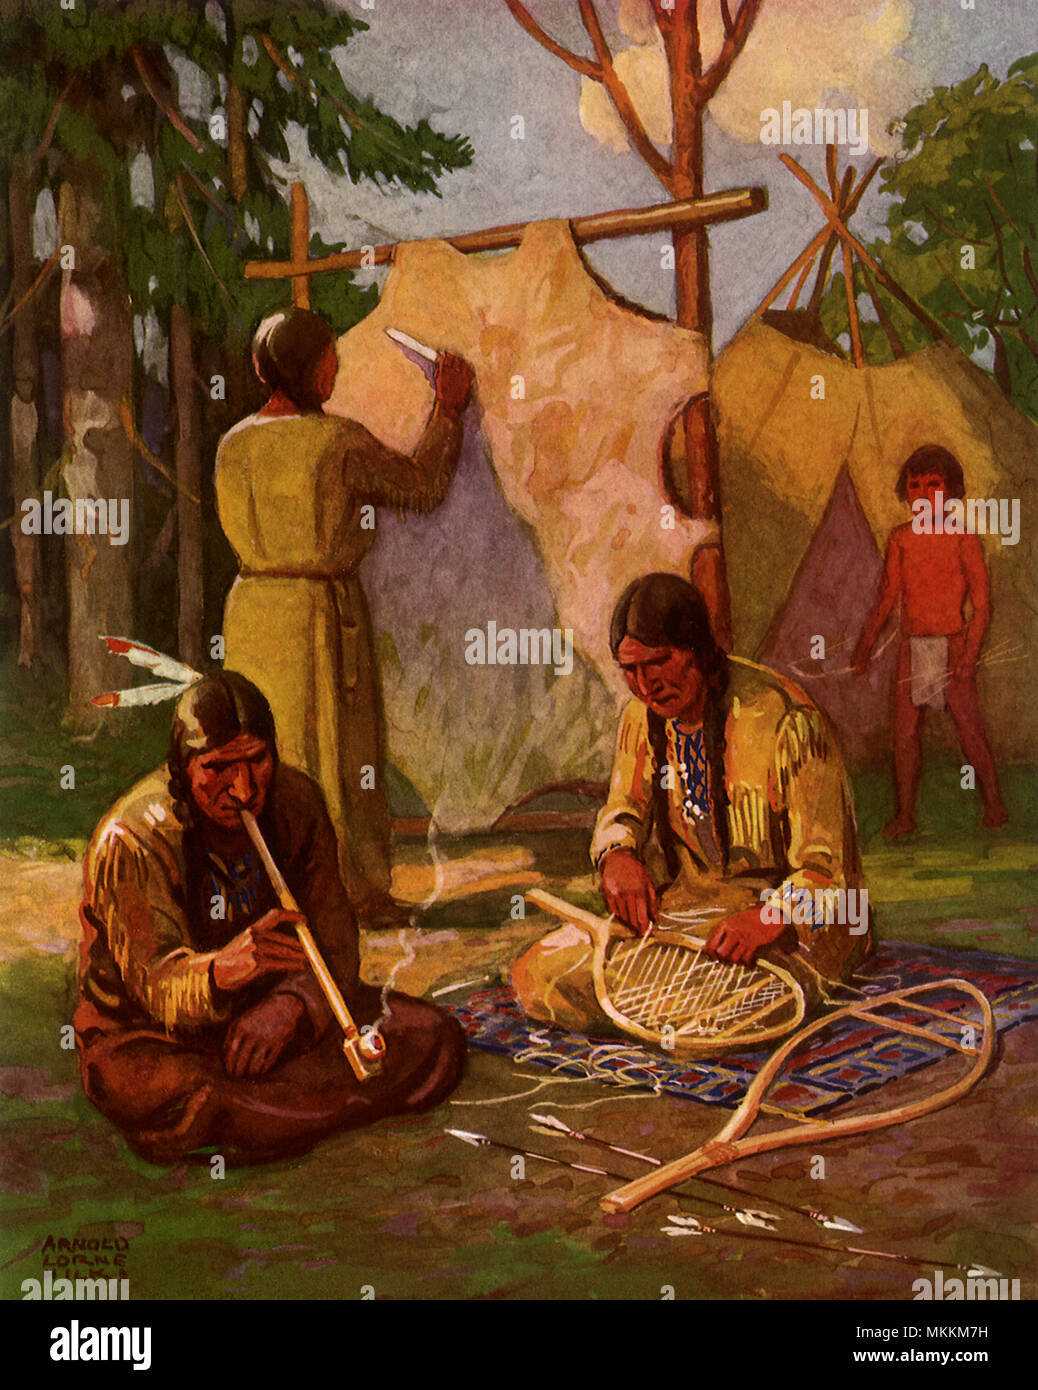 Native American camp Stock Photo